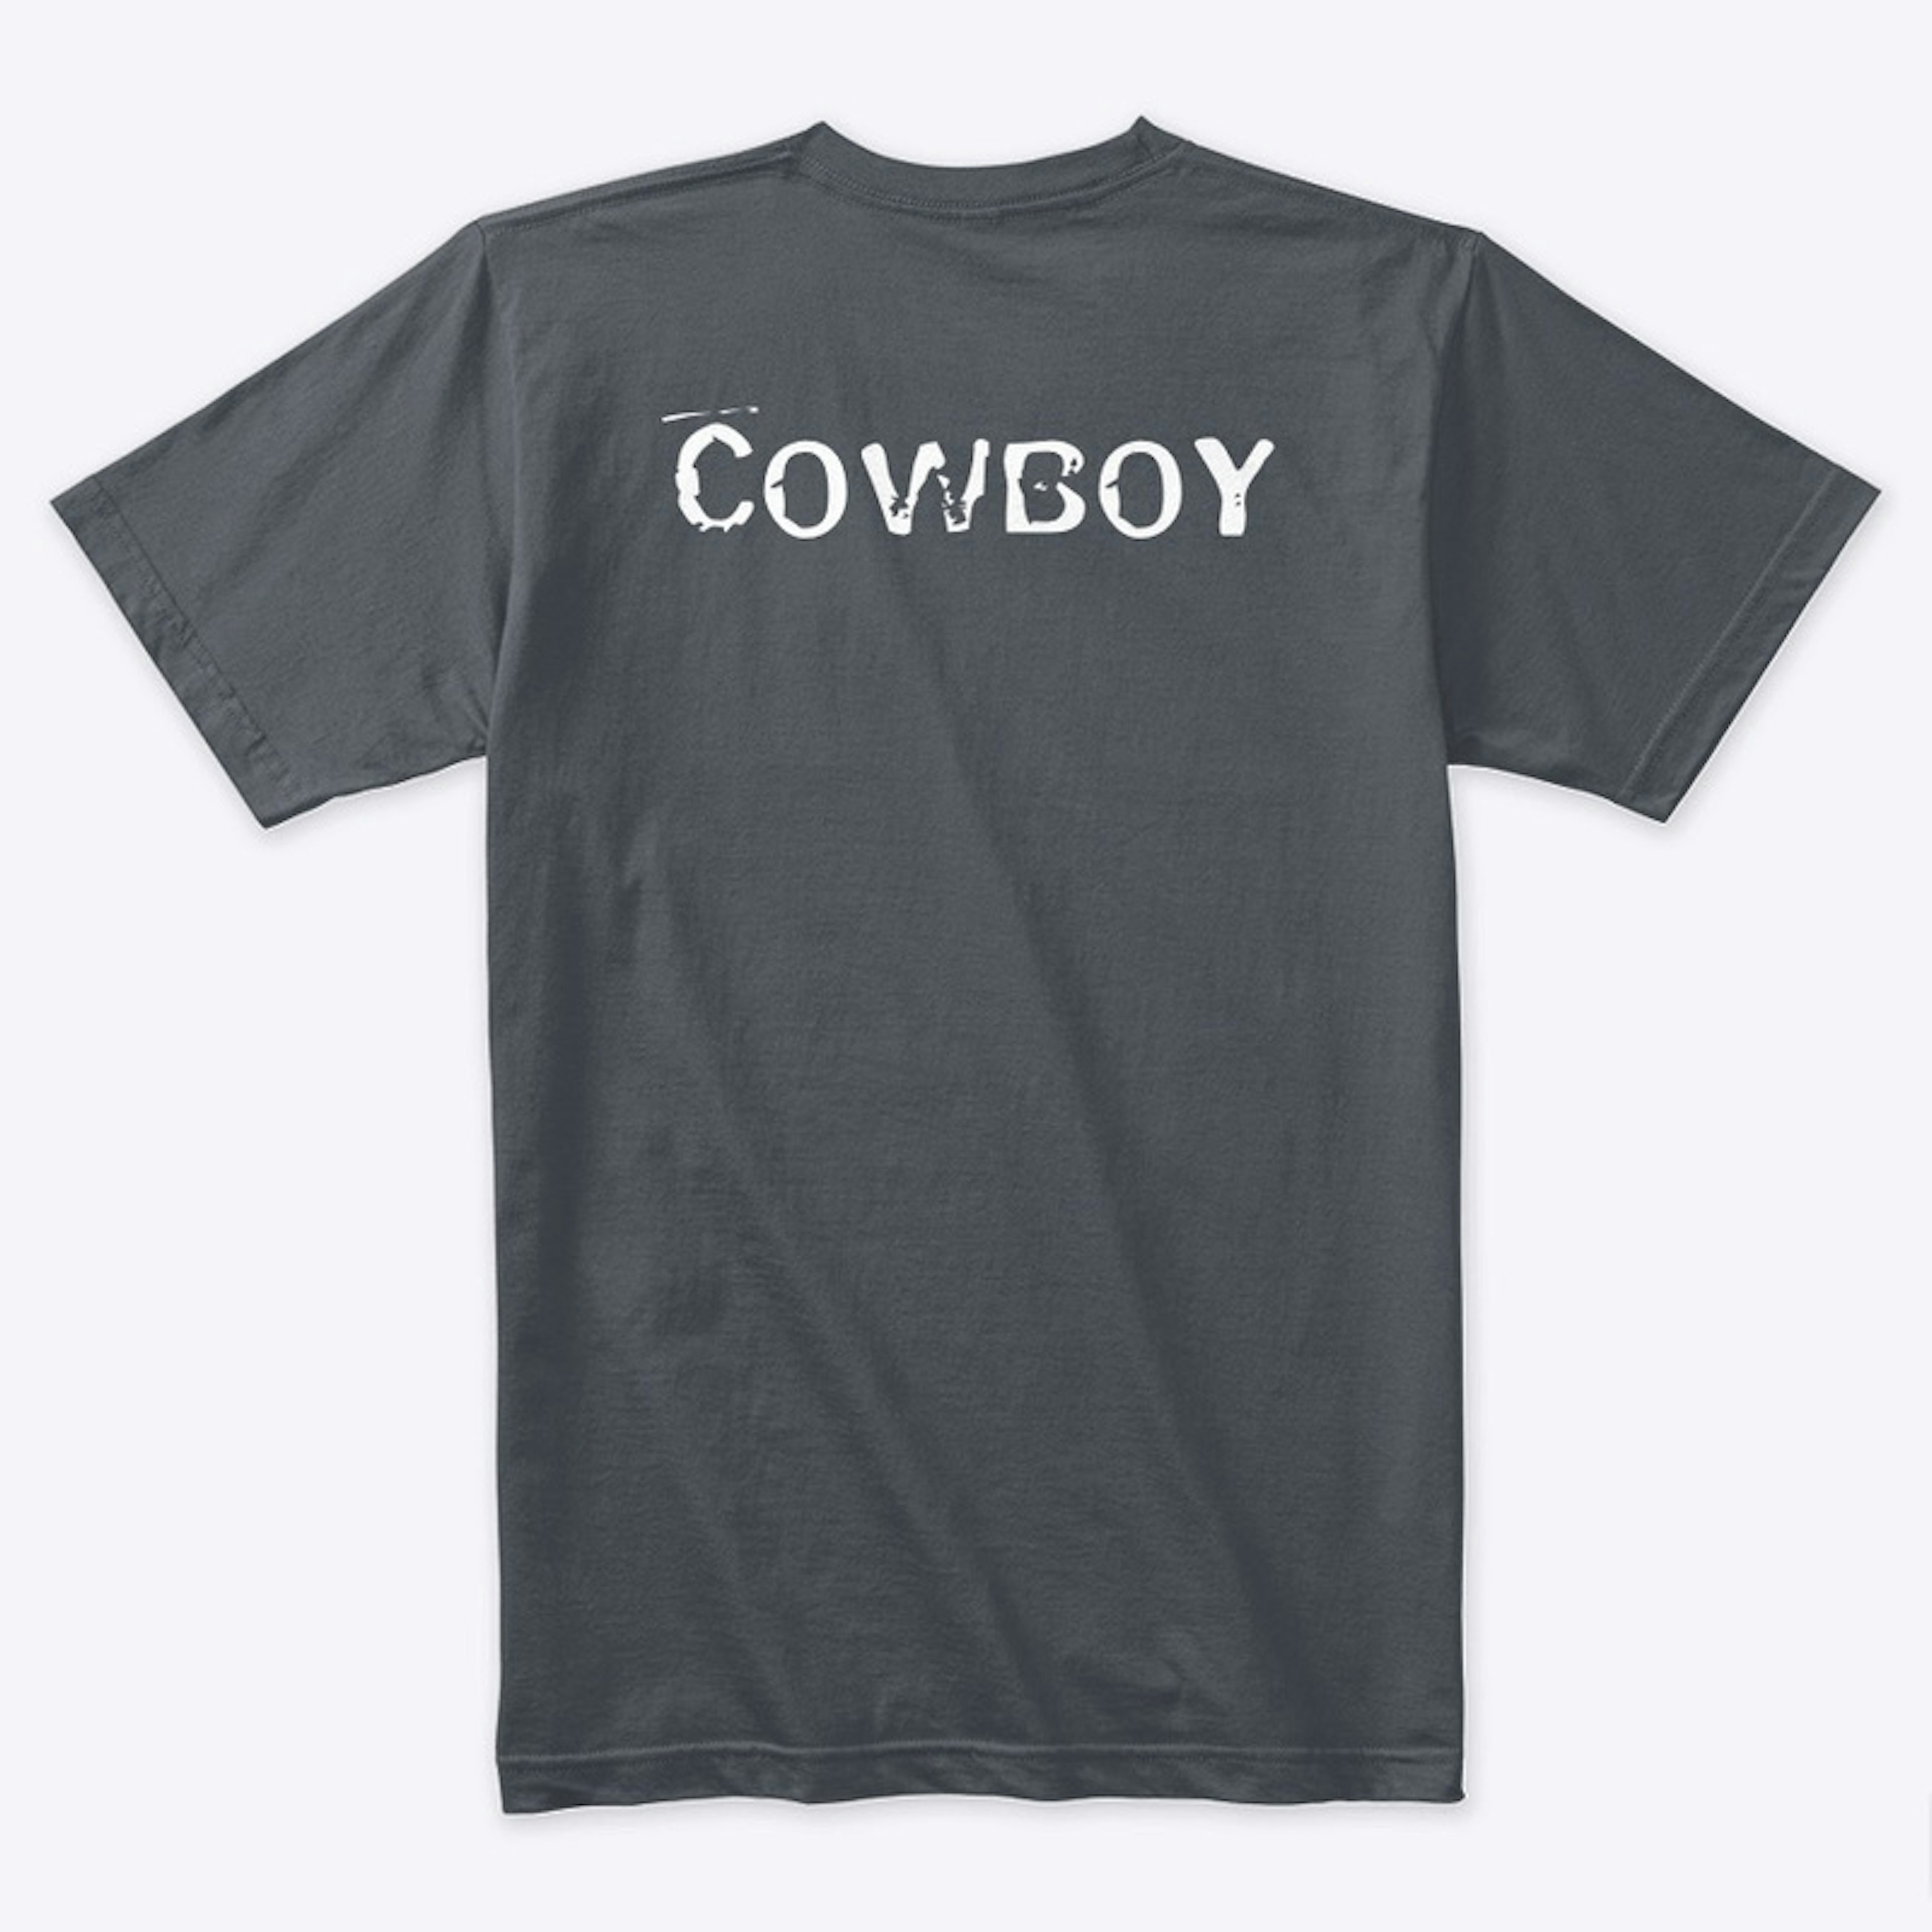 "Cowboy" 